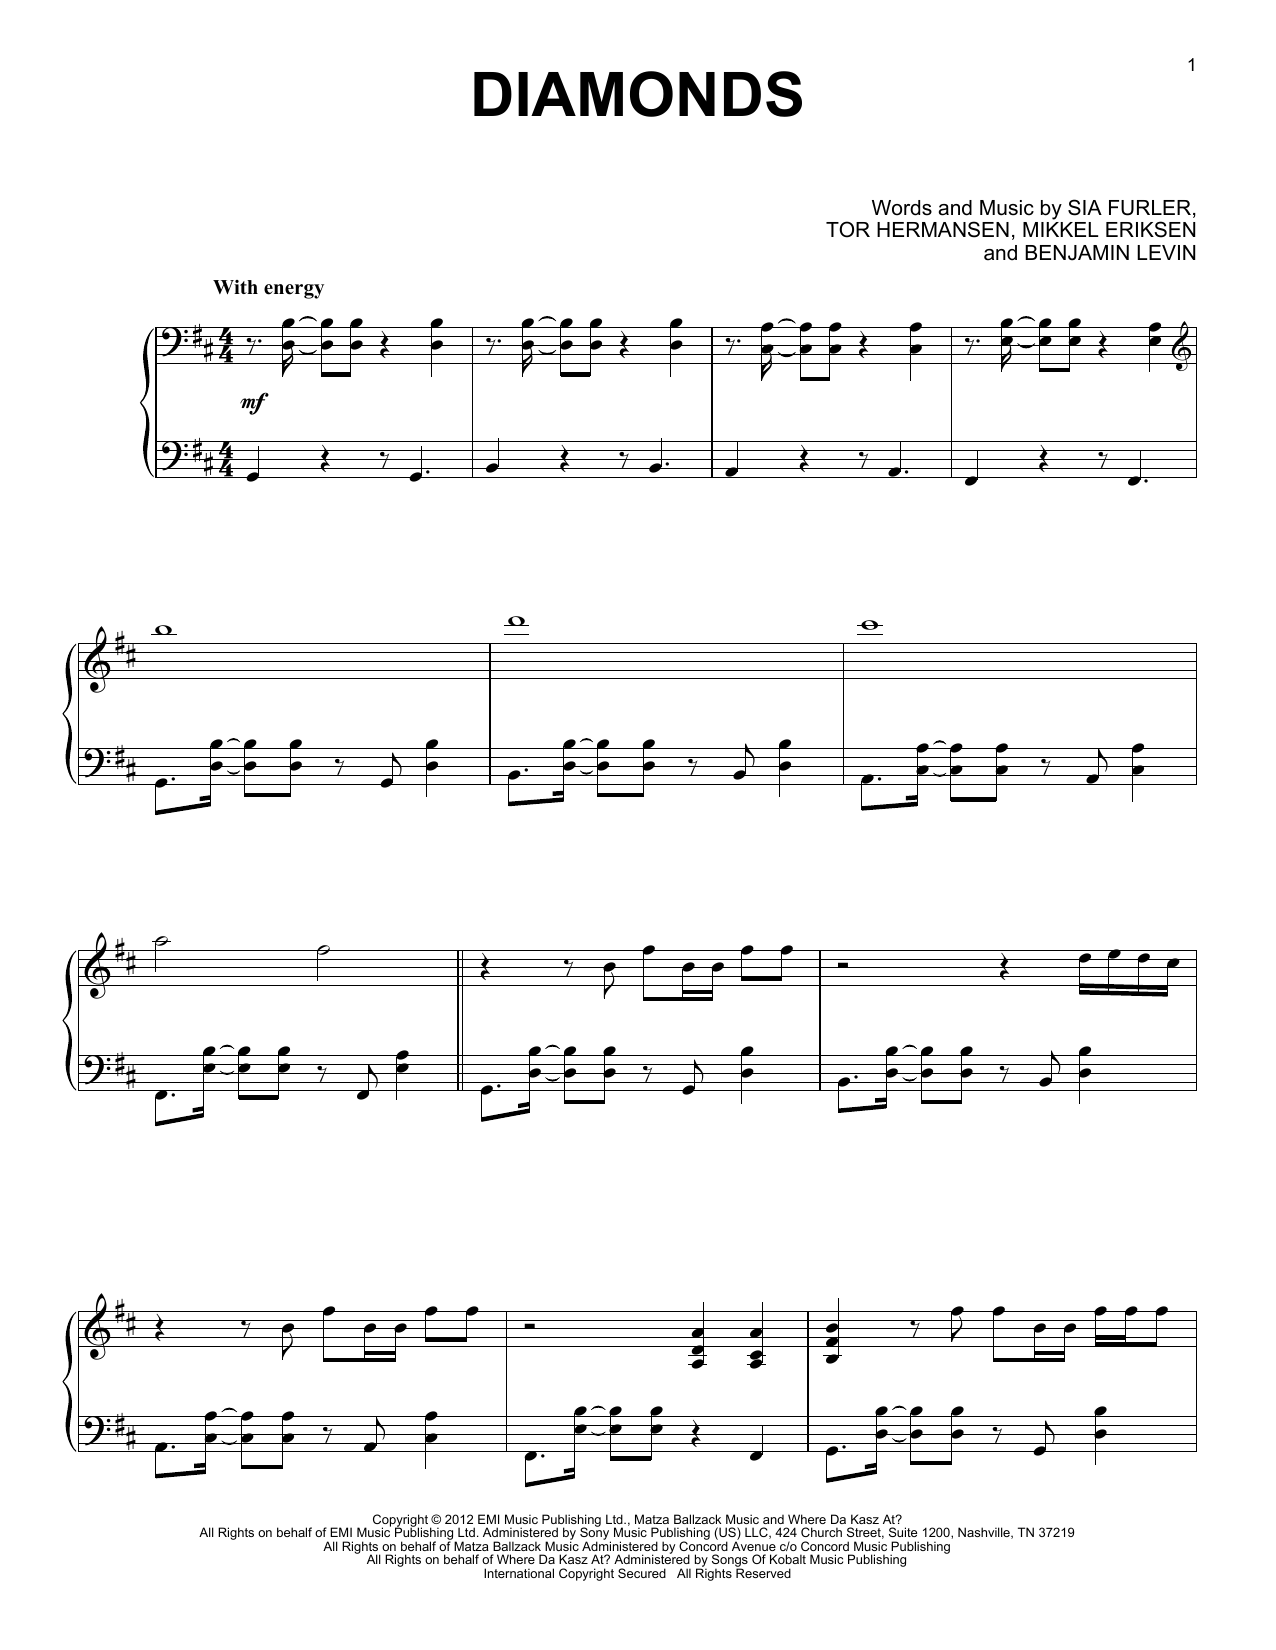 Hannah V & Joe Rodwell Diamonds (from the Netflix series Bridgerton) Sheet Music Notes & Chords for Piano Solo - Download or Print PDF